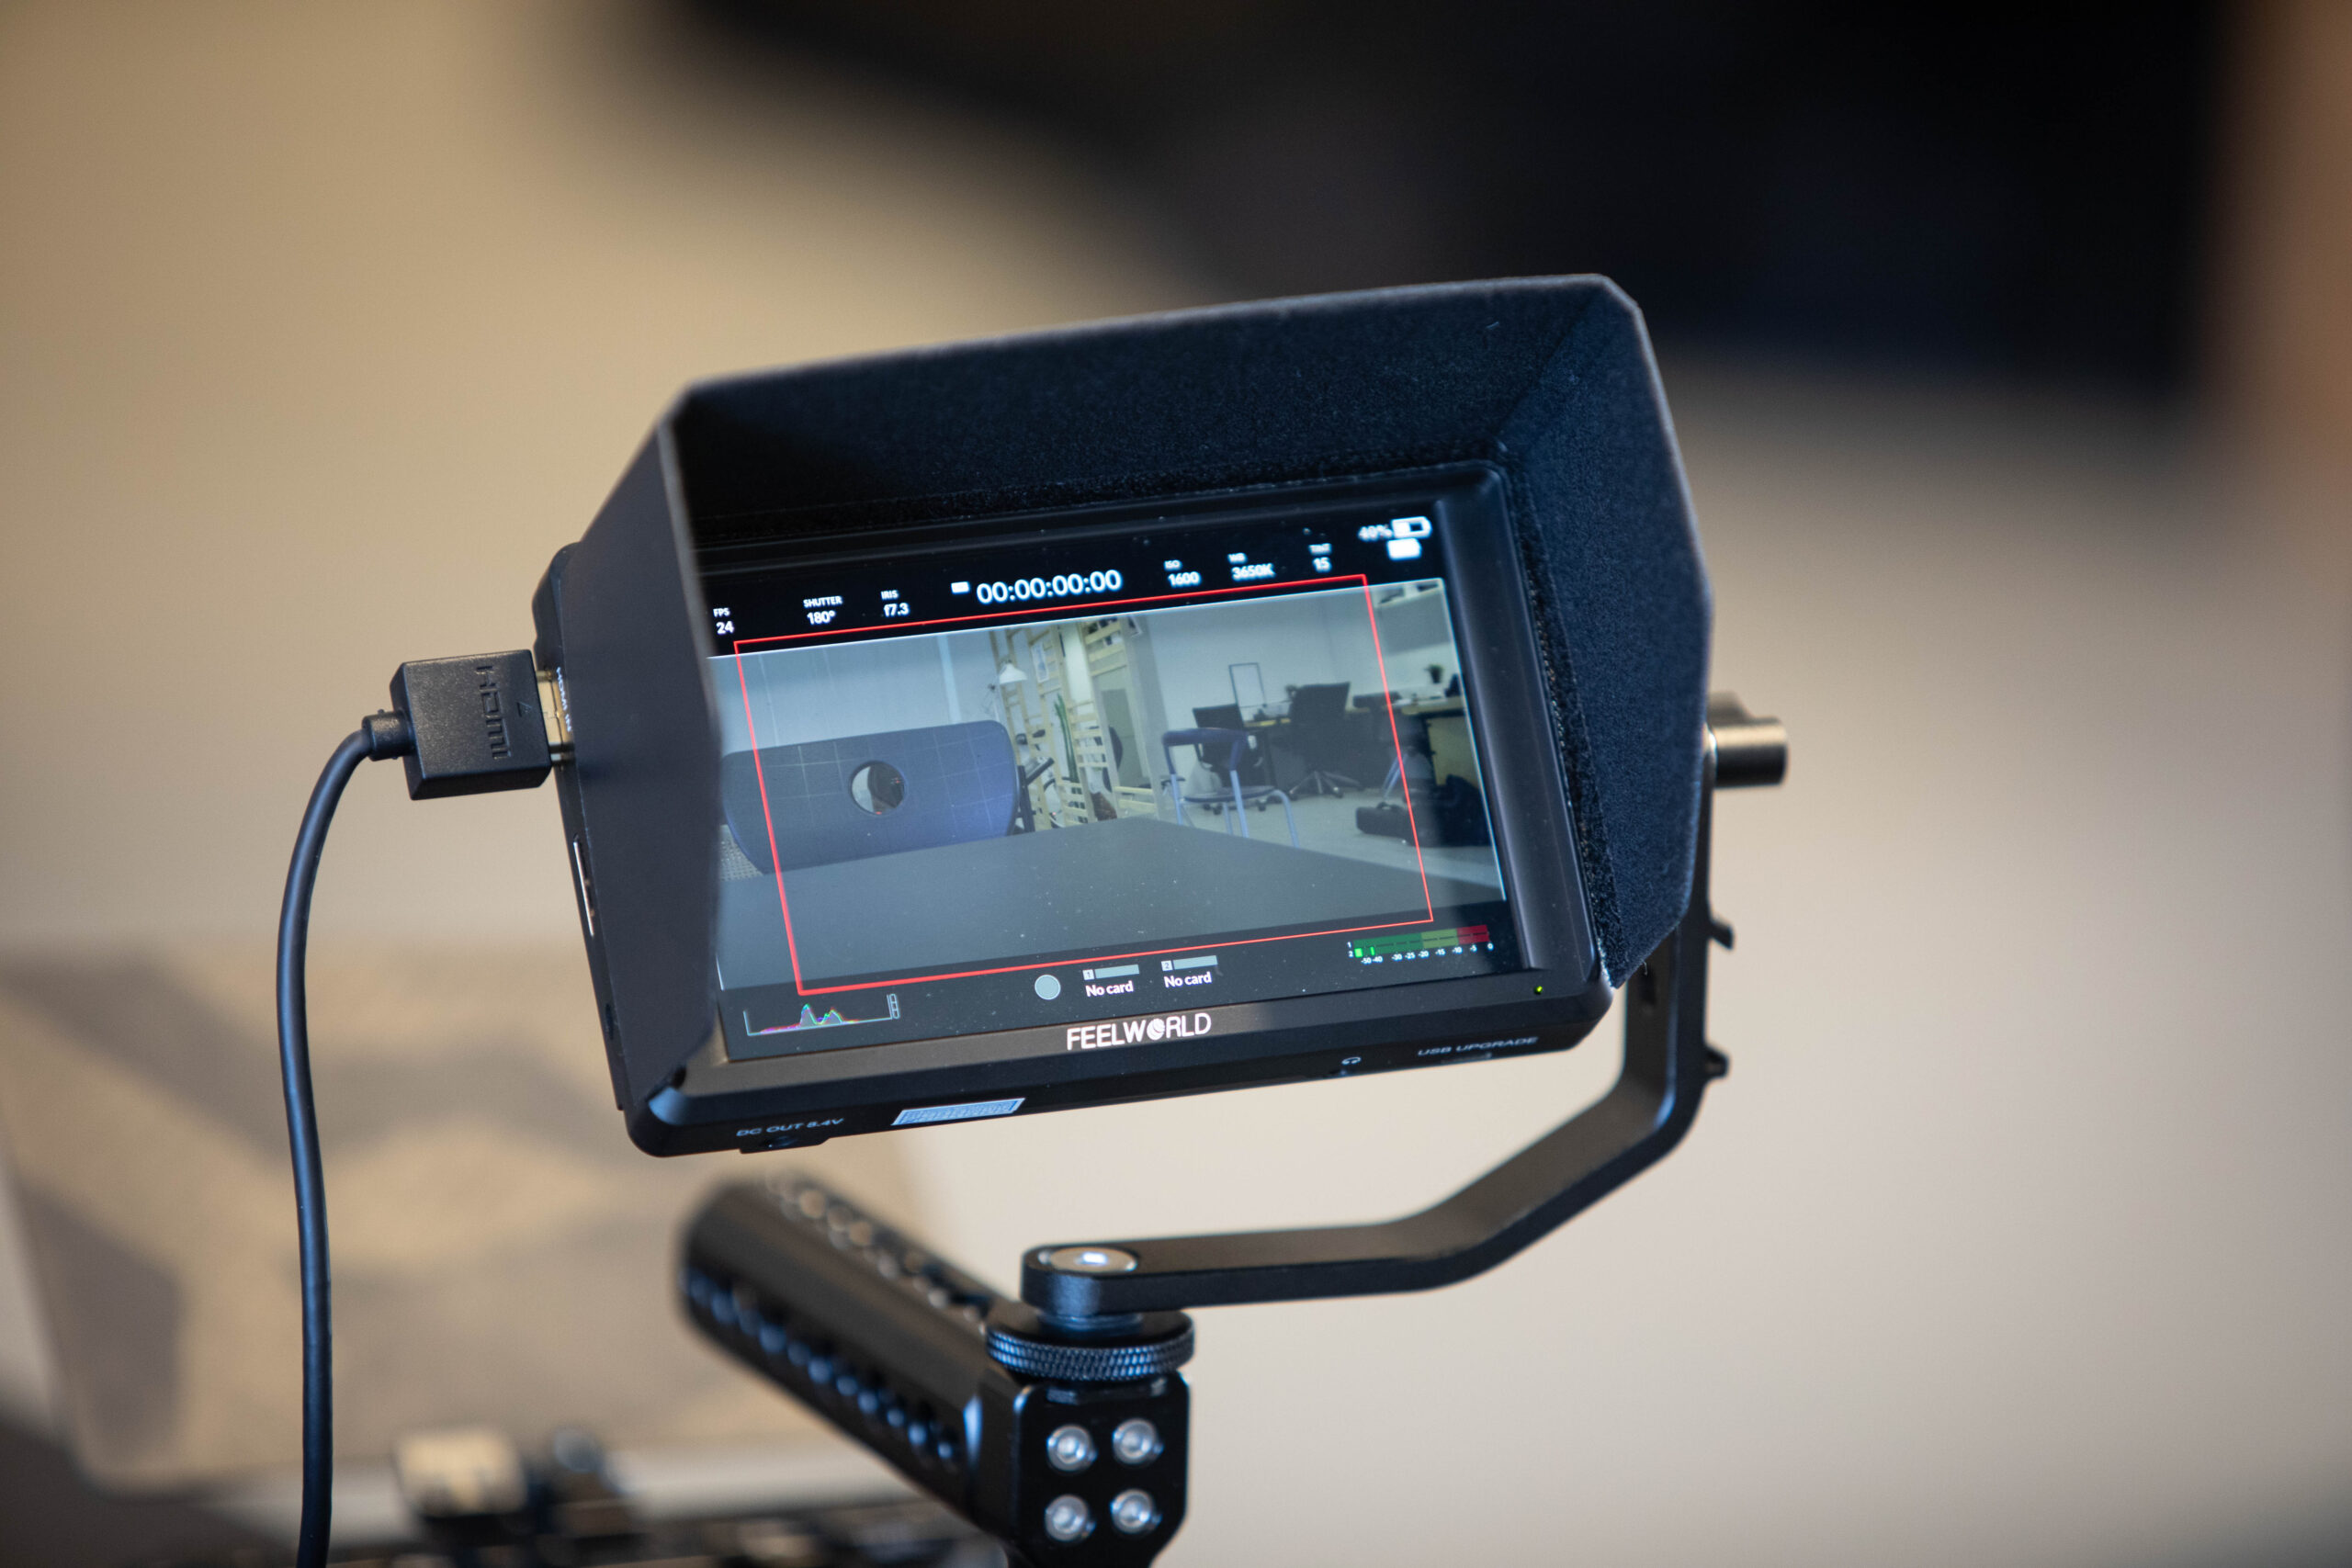 Film kamera udstyr